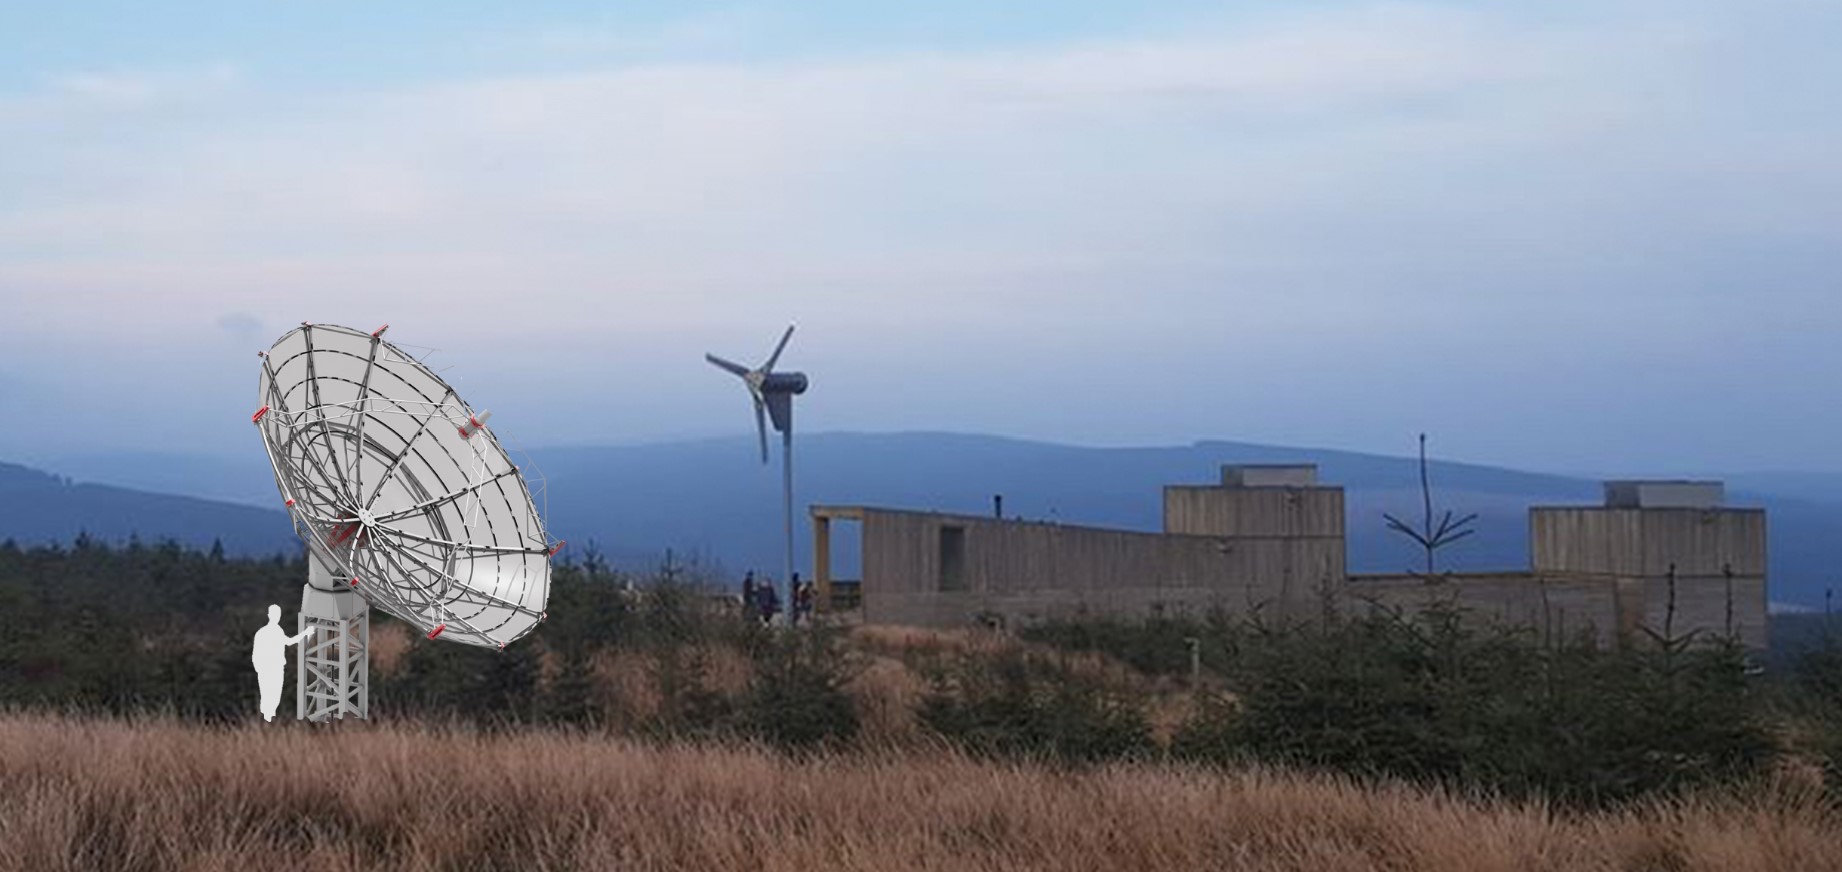 Spider 5 metre radio telescope